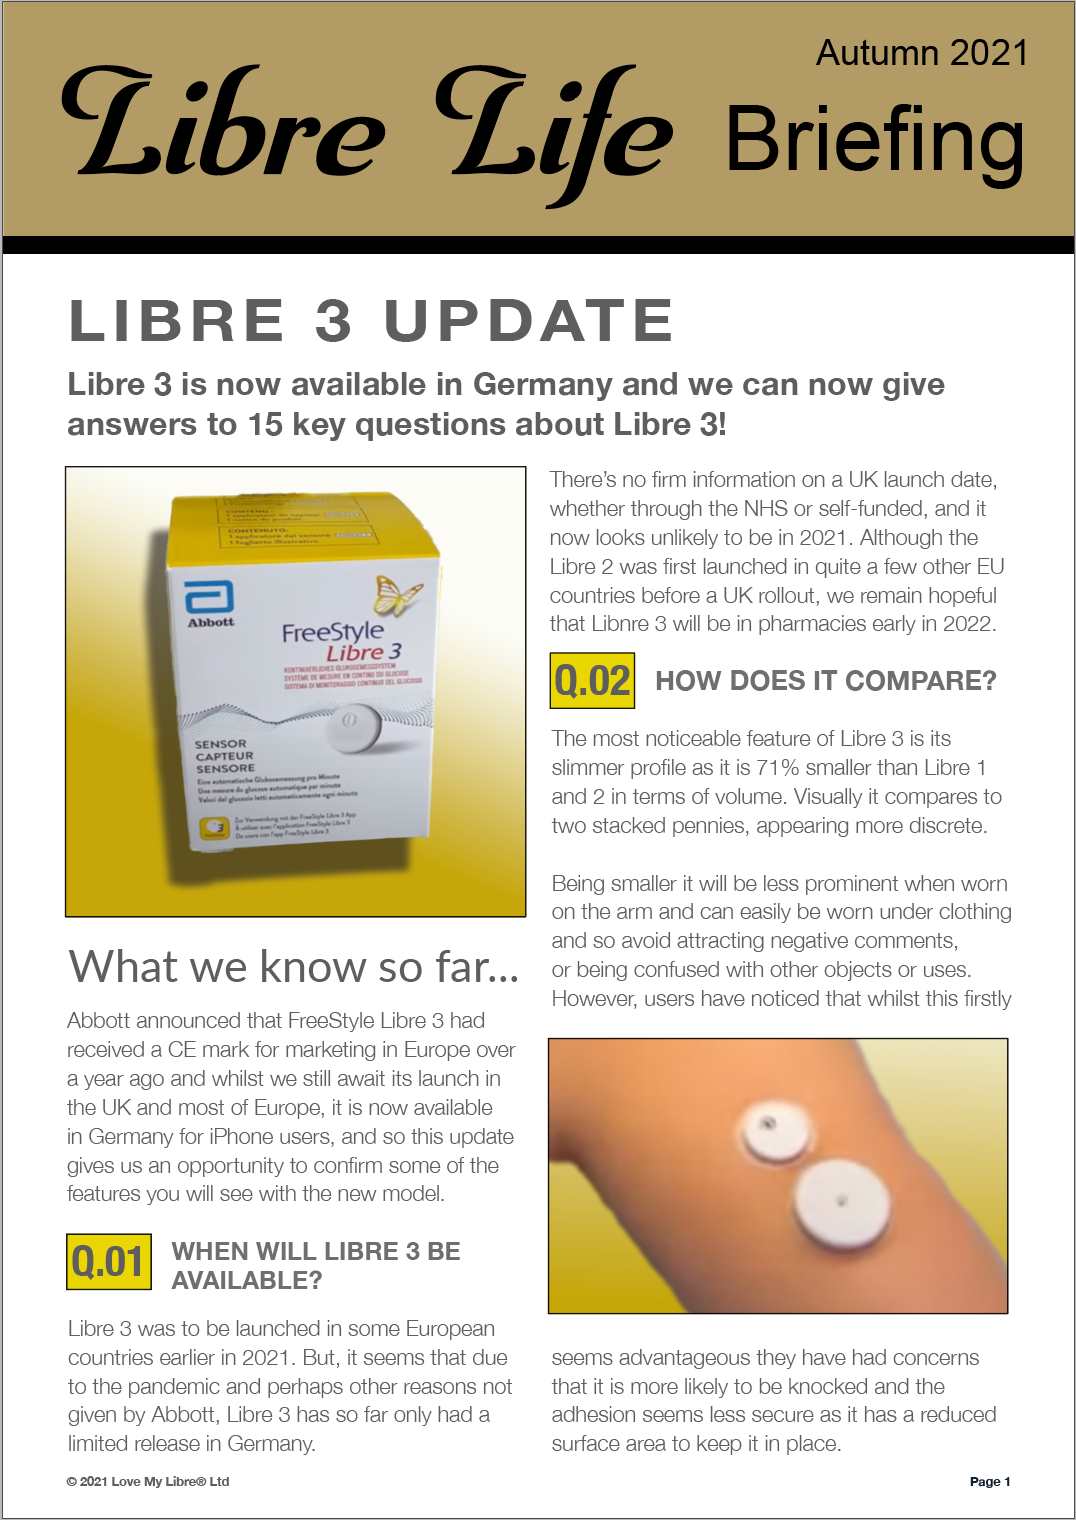 Libre Life Briefing: Libre 3 Update